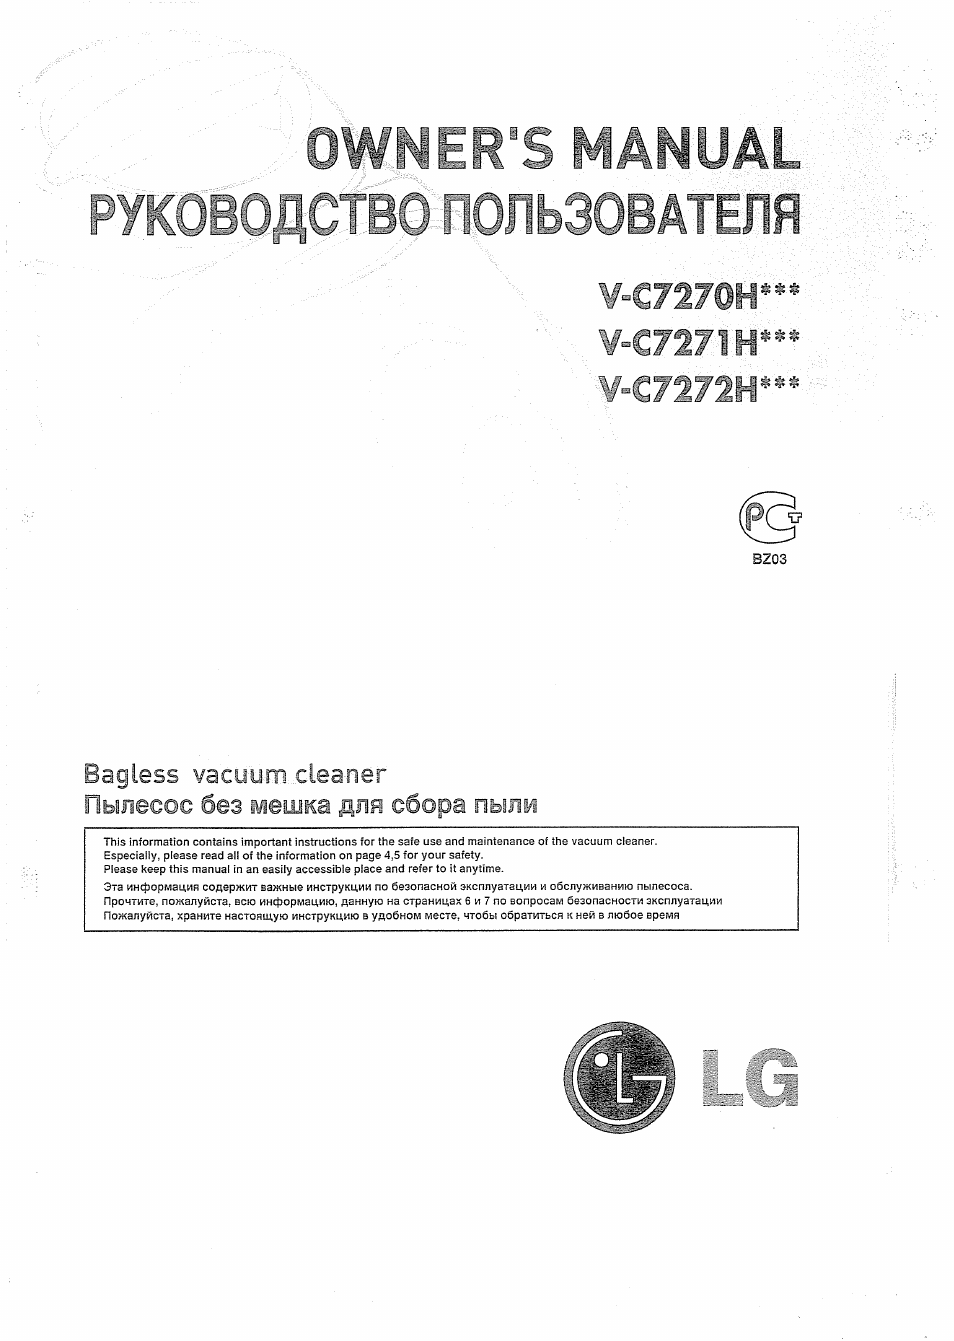 Инструкция по эксплуатации LG V-C7270 HTR | 16 страниц